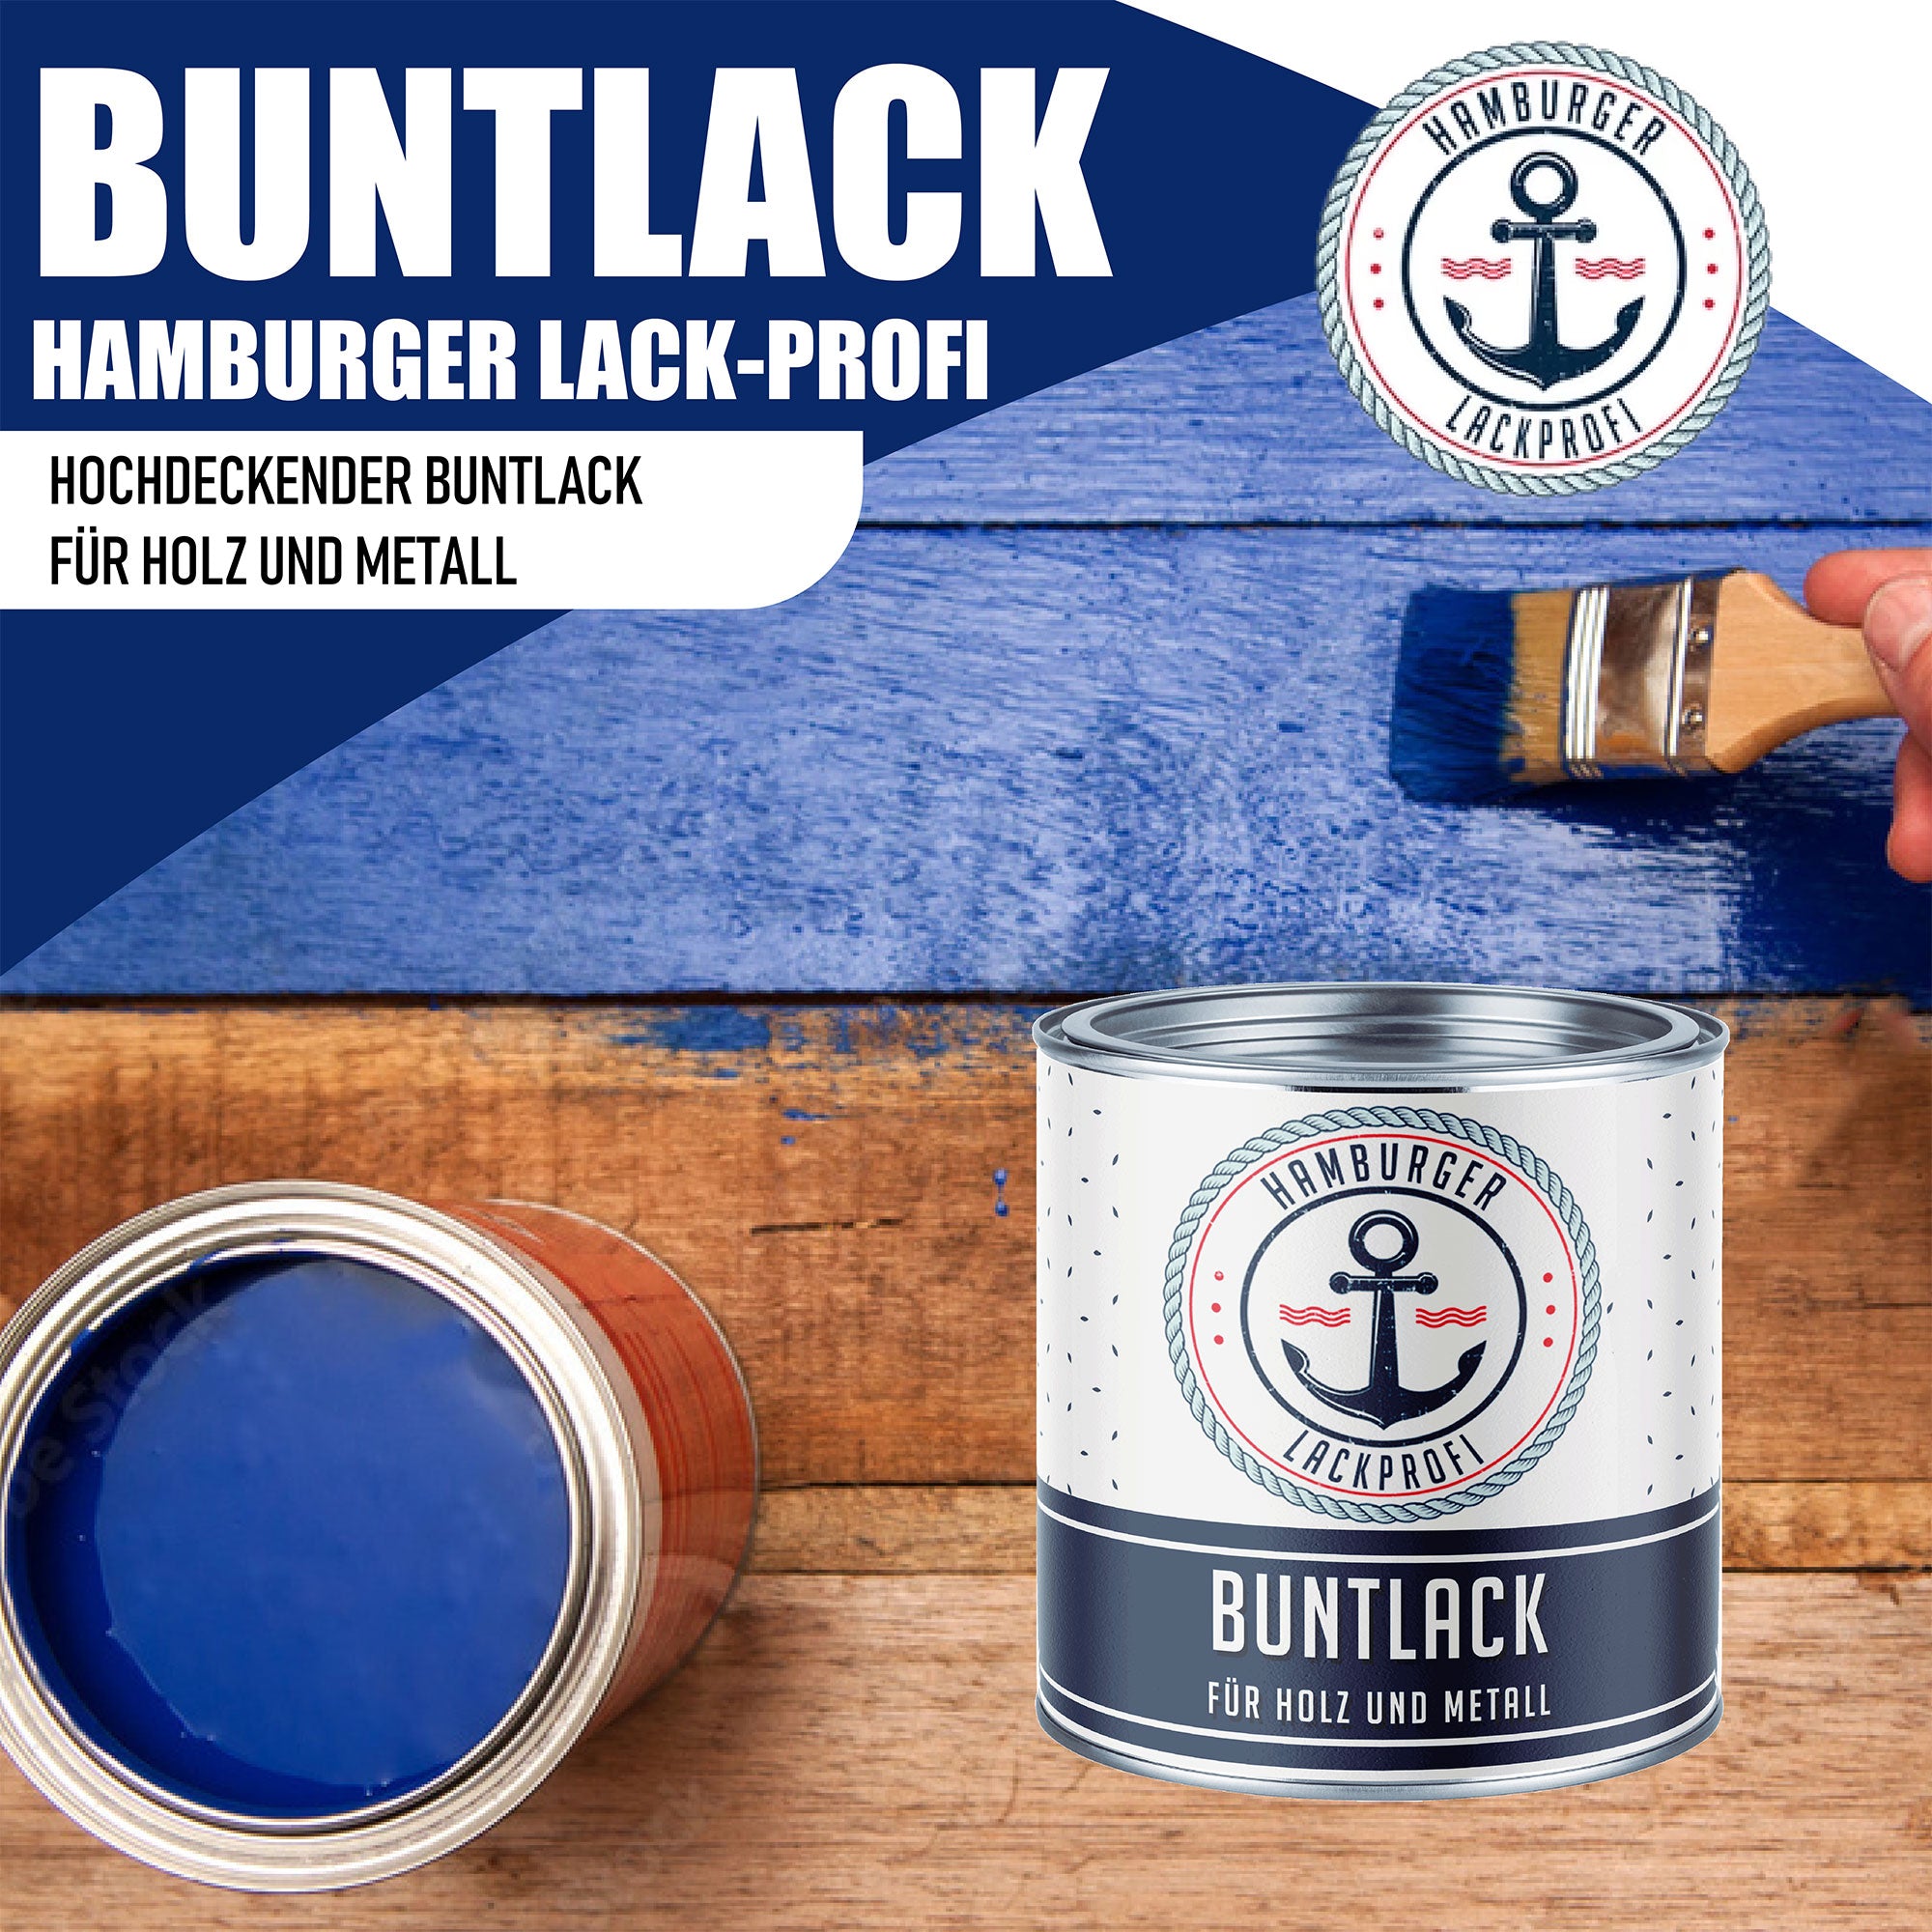 Hamburger Lack-Profi Buntlack in Pastellgelb RAL 1034 mit Lackierset (X300) & Verdünnung (1 L) - 30% Sparangebot